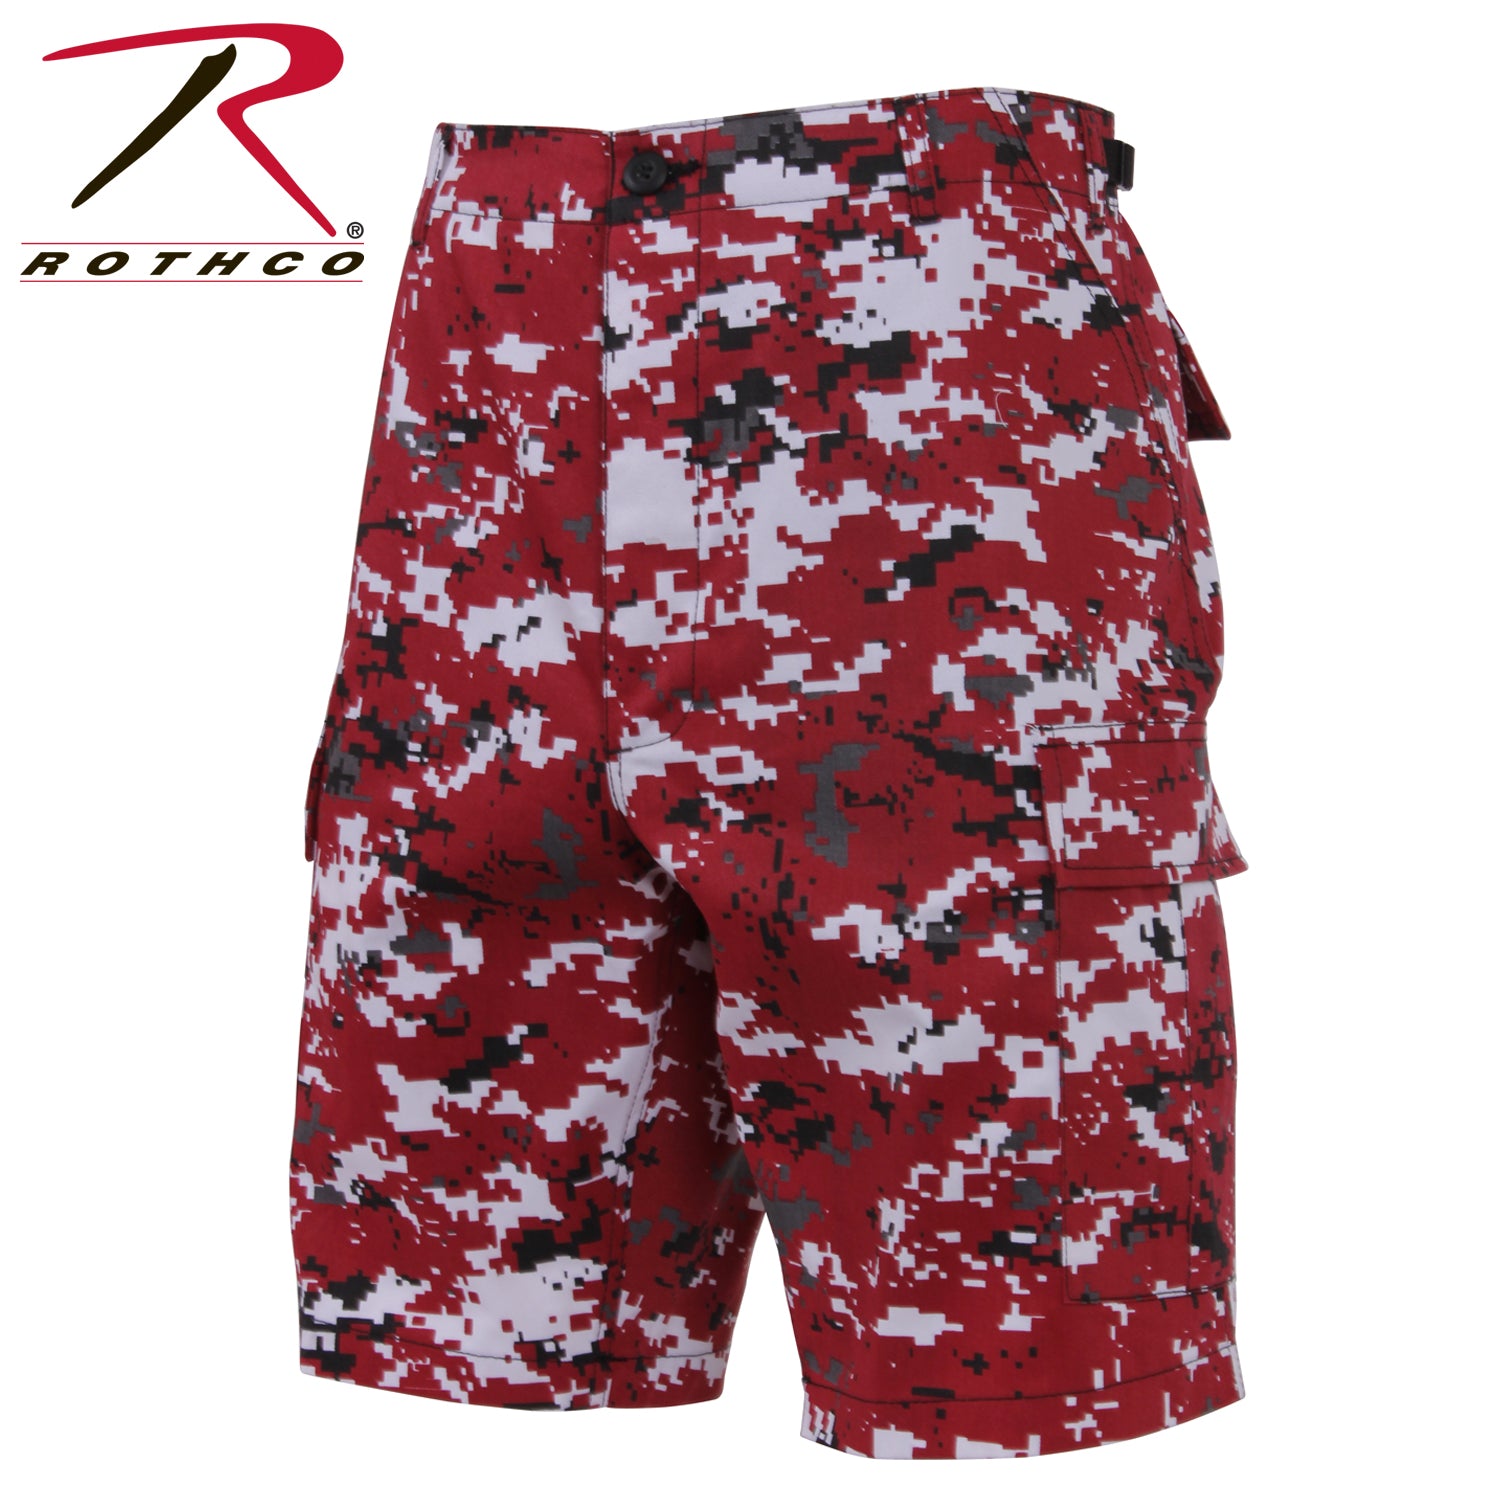 Rothco Digital Camo BDU Shorts - Tactical Choice Plus